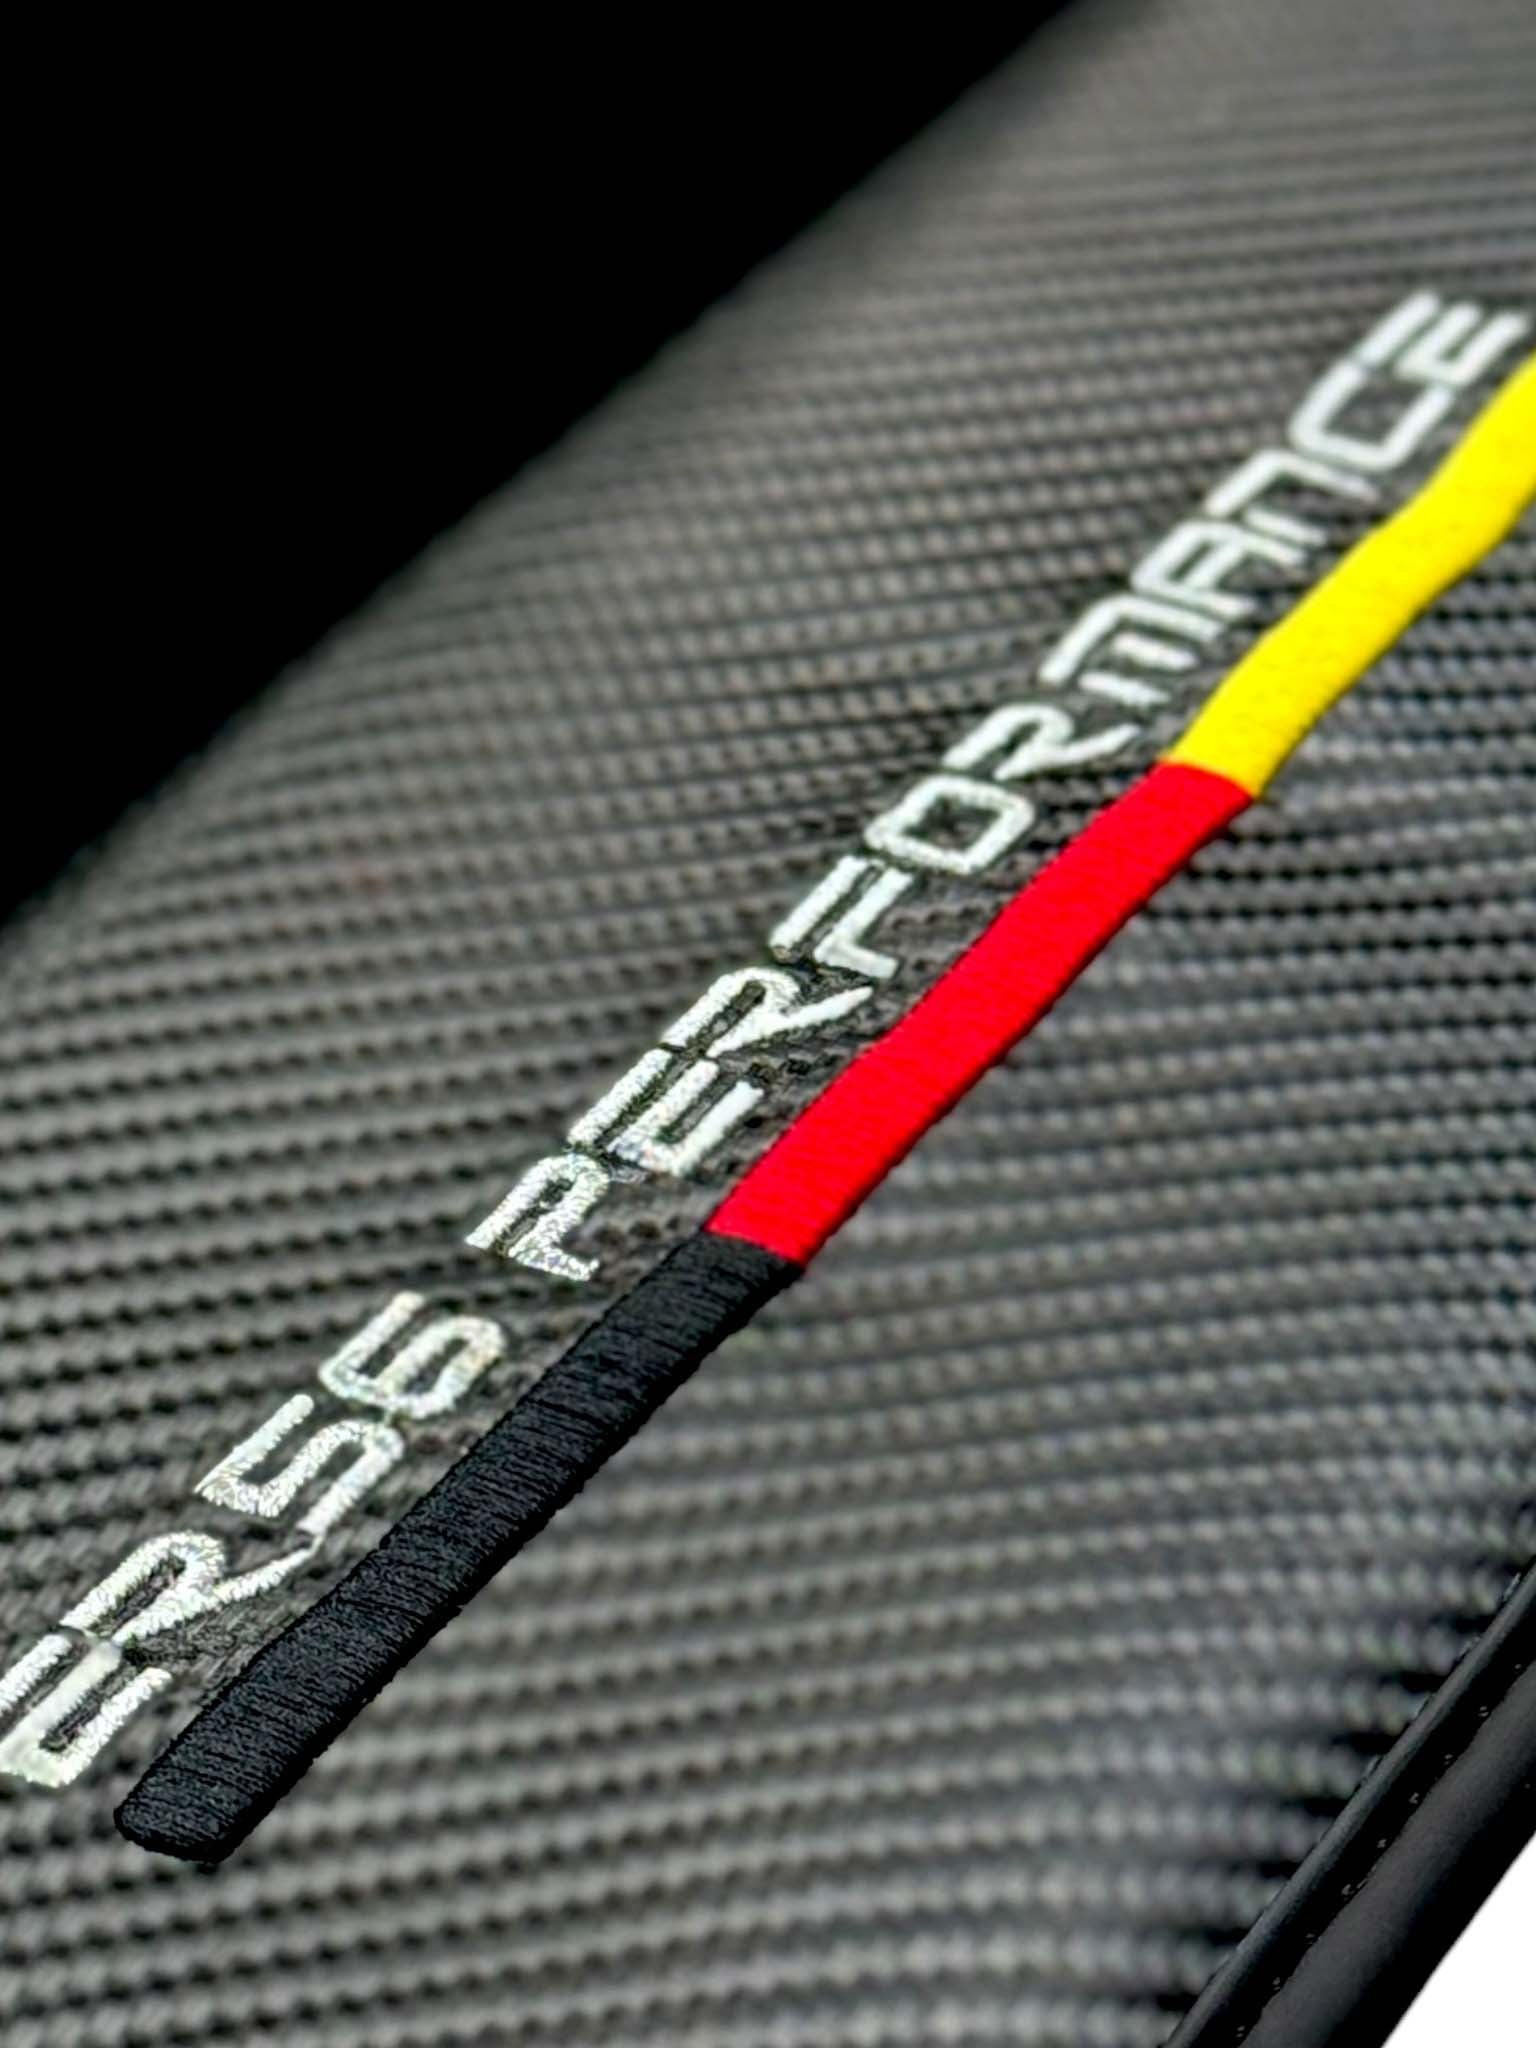 Black Floor Floor Mats For BMW 7 Series F01 | ER56 Performance | Carbon Edition